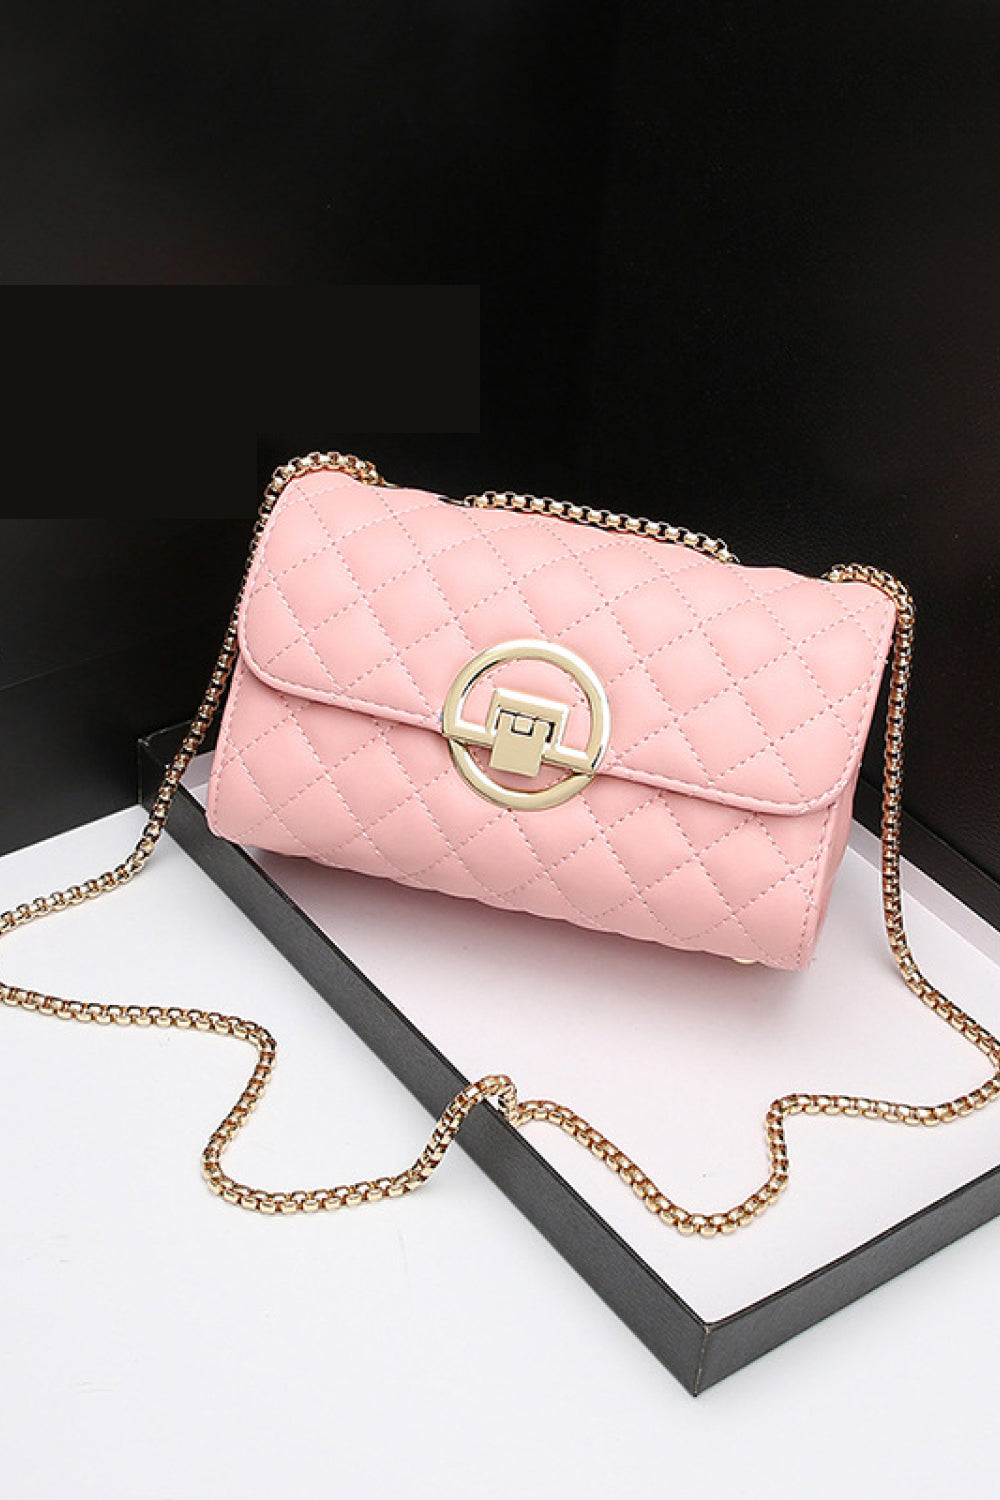 PU Leather Crossbody Bag - Blush Pink / One Size Wynter 4 All Seasons